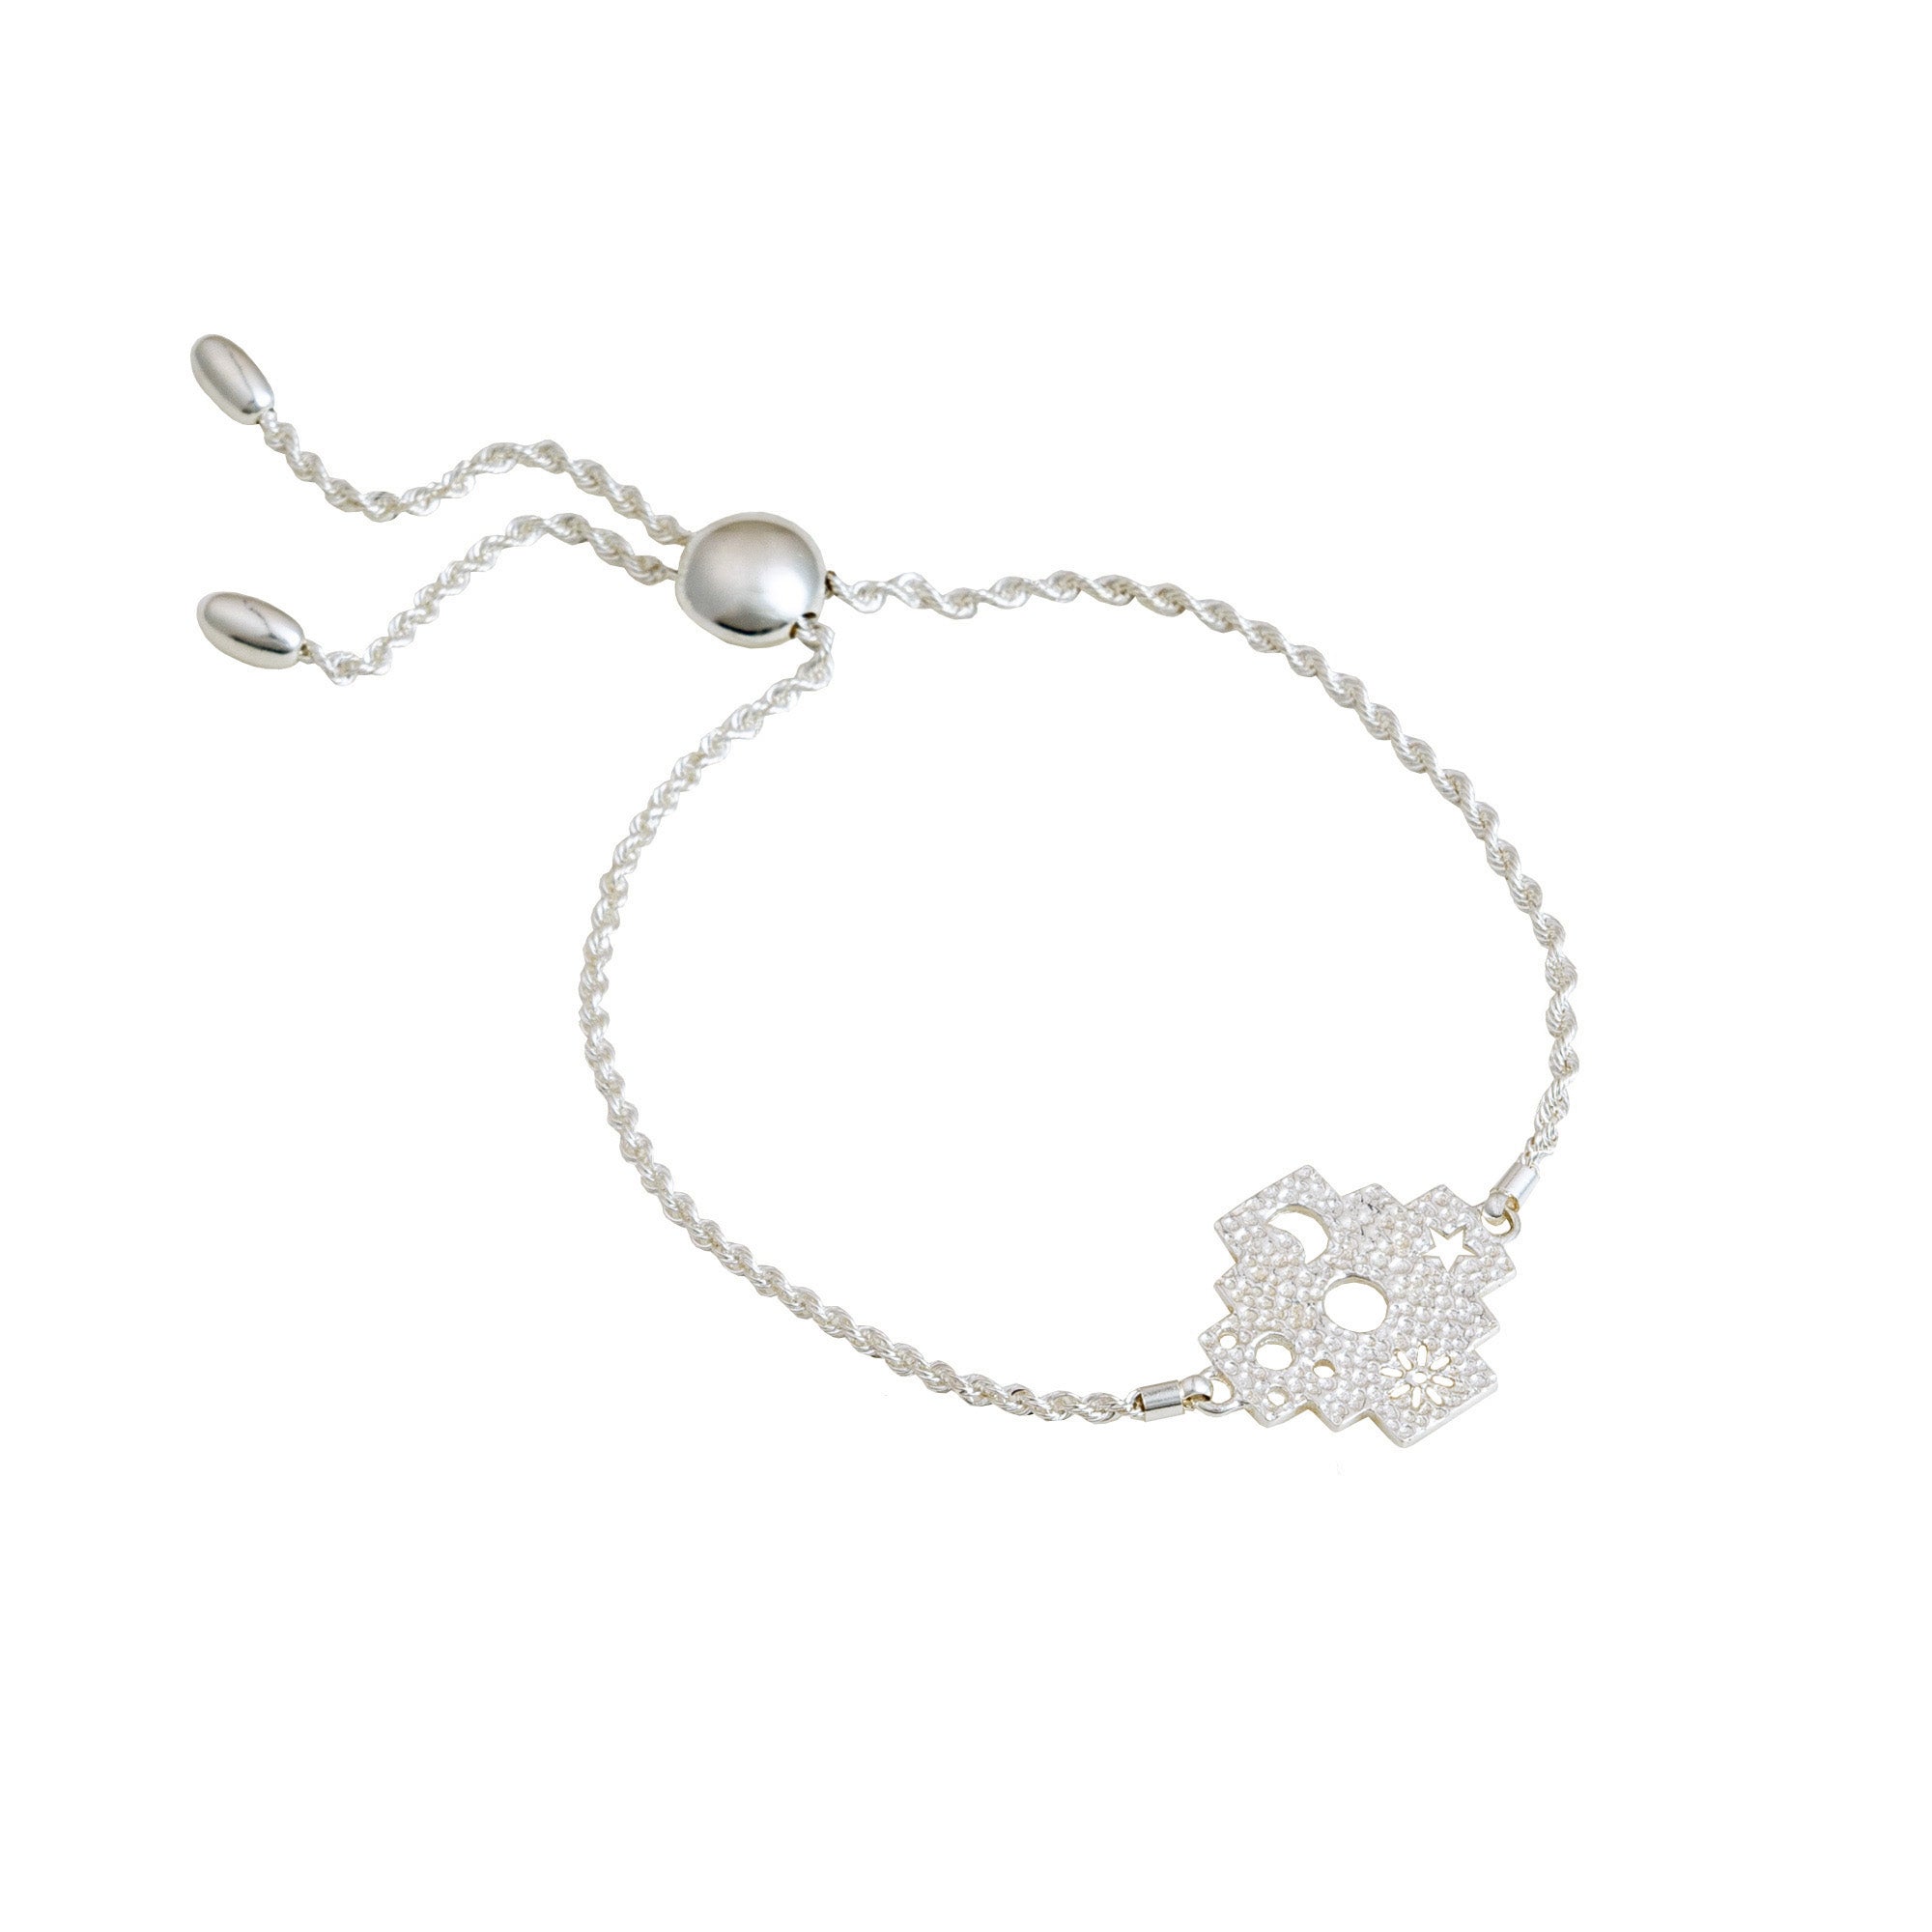 Sterling Silver Charming Design Premium-Grade Quality Bracelet for Men -  Style C950 at Rs 4400.00 | Rajkot| ID: 2853360219362